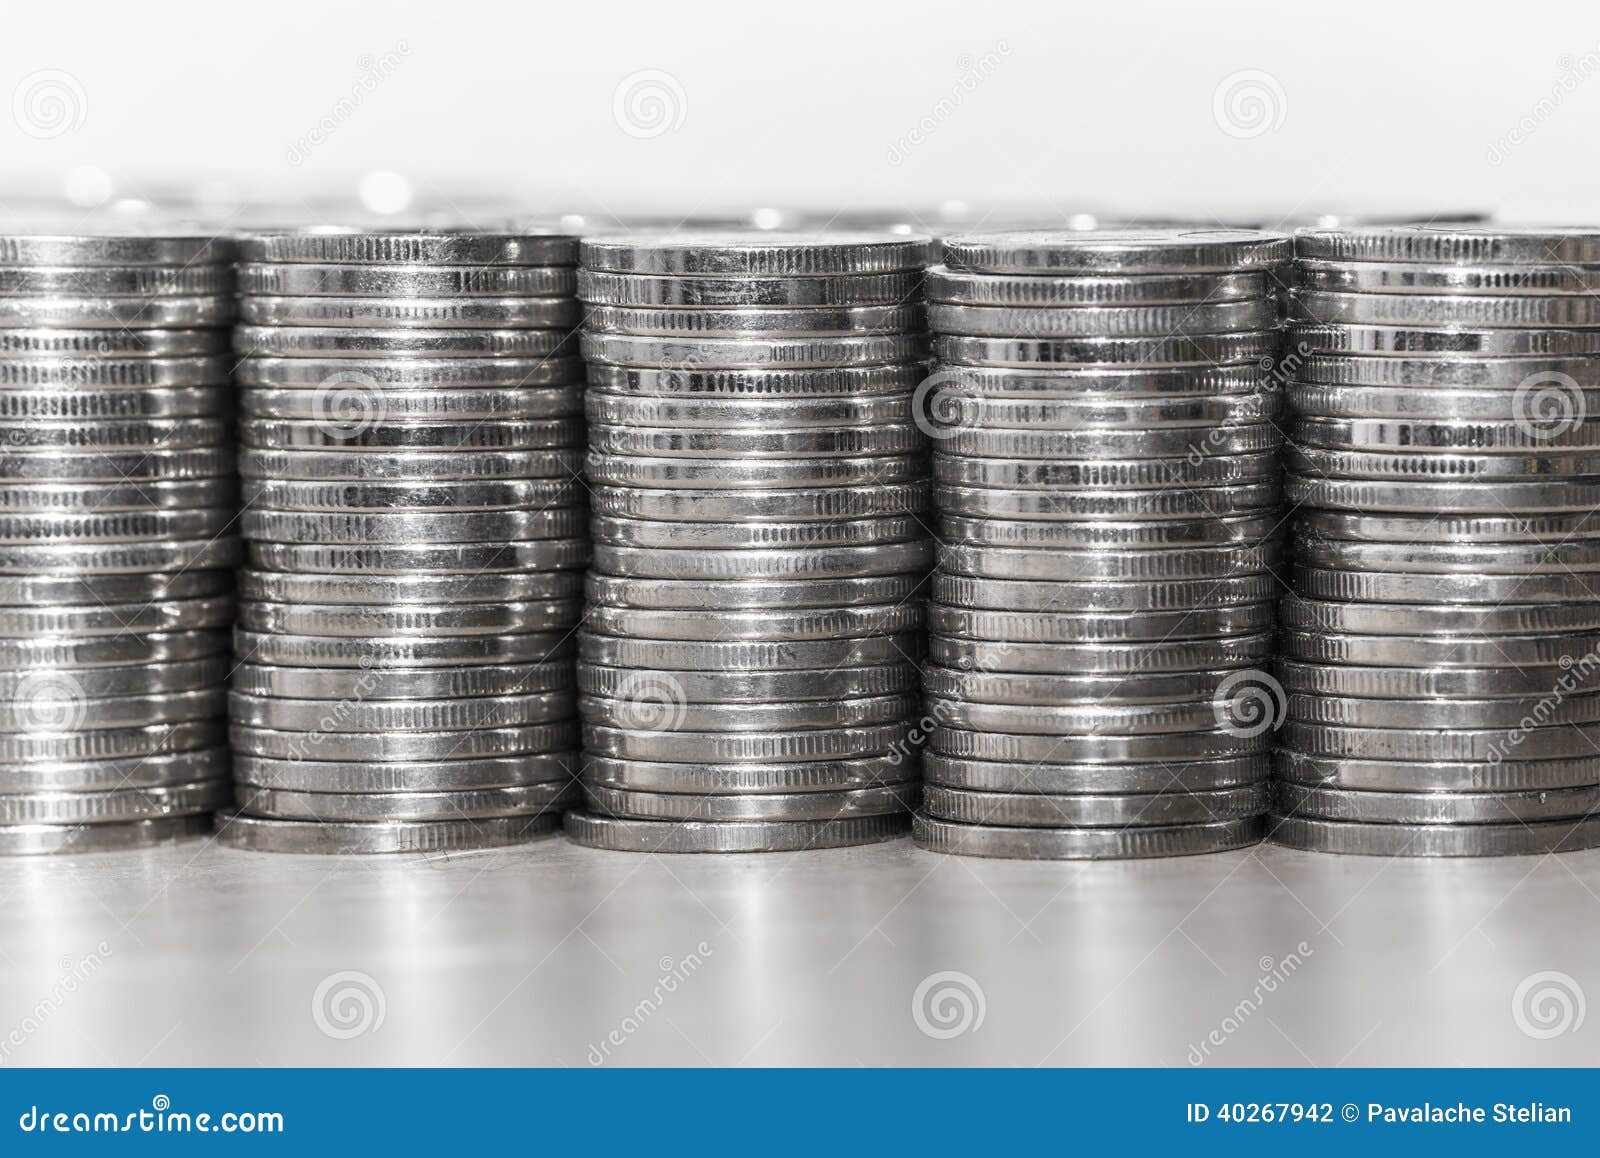 piles of metalic currencies